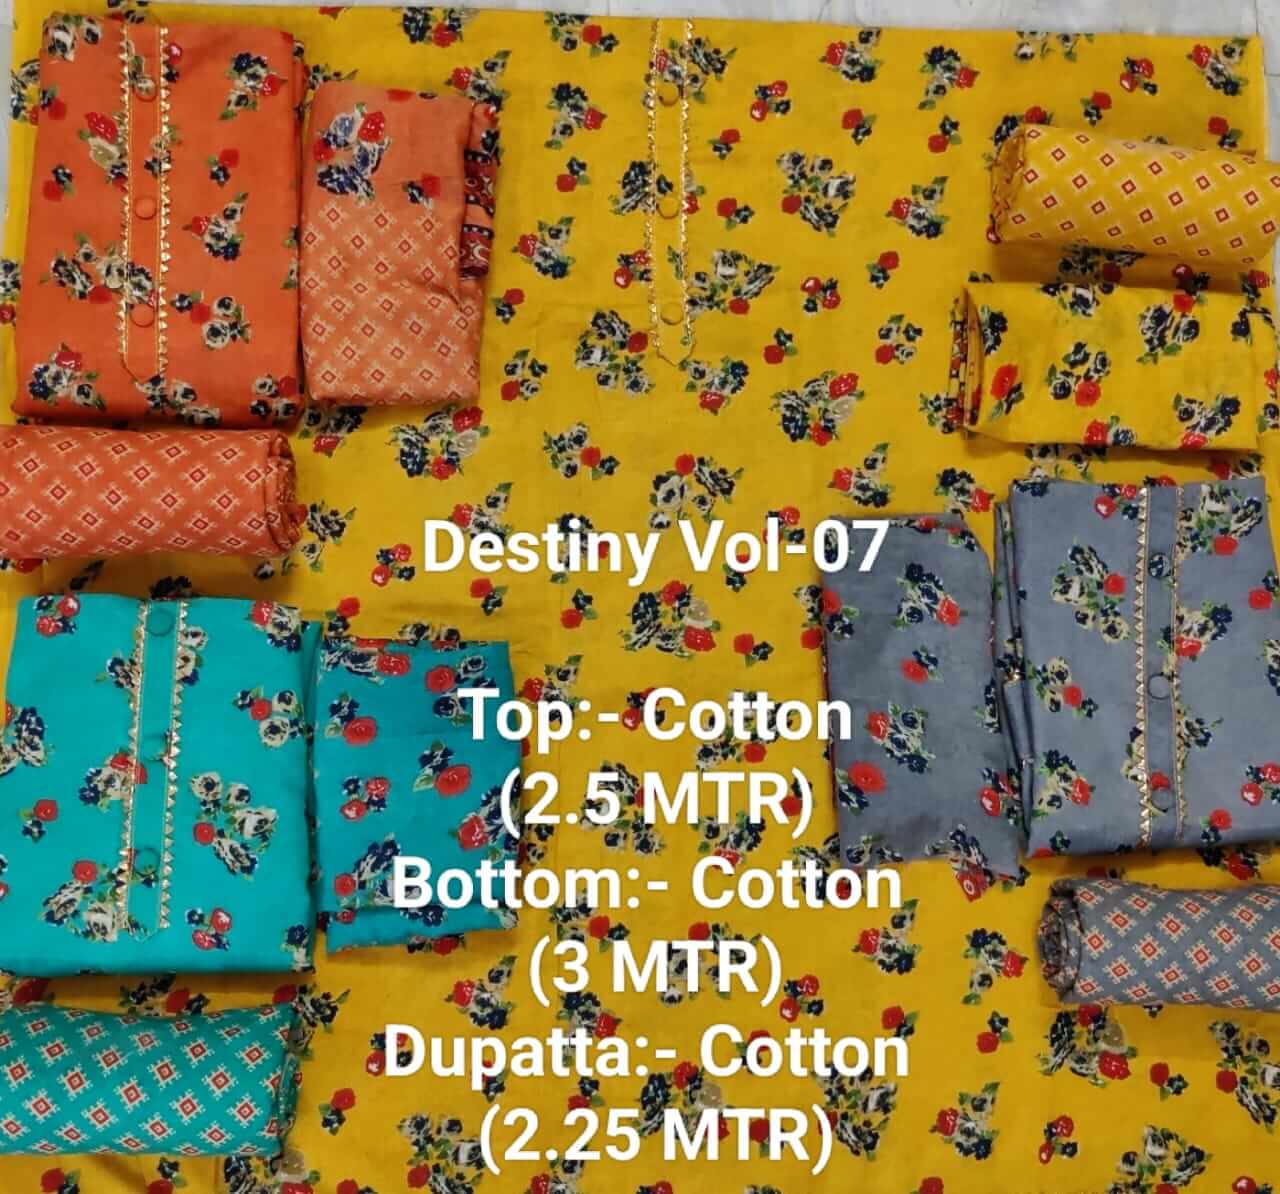 Destiny Vol 7 Cotton Dress Material Catalog In Wholesale Price, Purchase Full Catalog of Destiny Vol 7 In wholesale Price Online